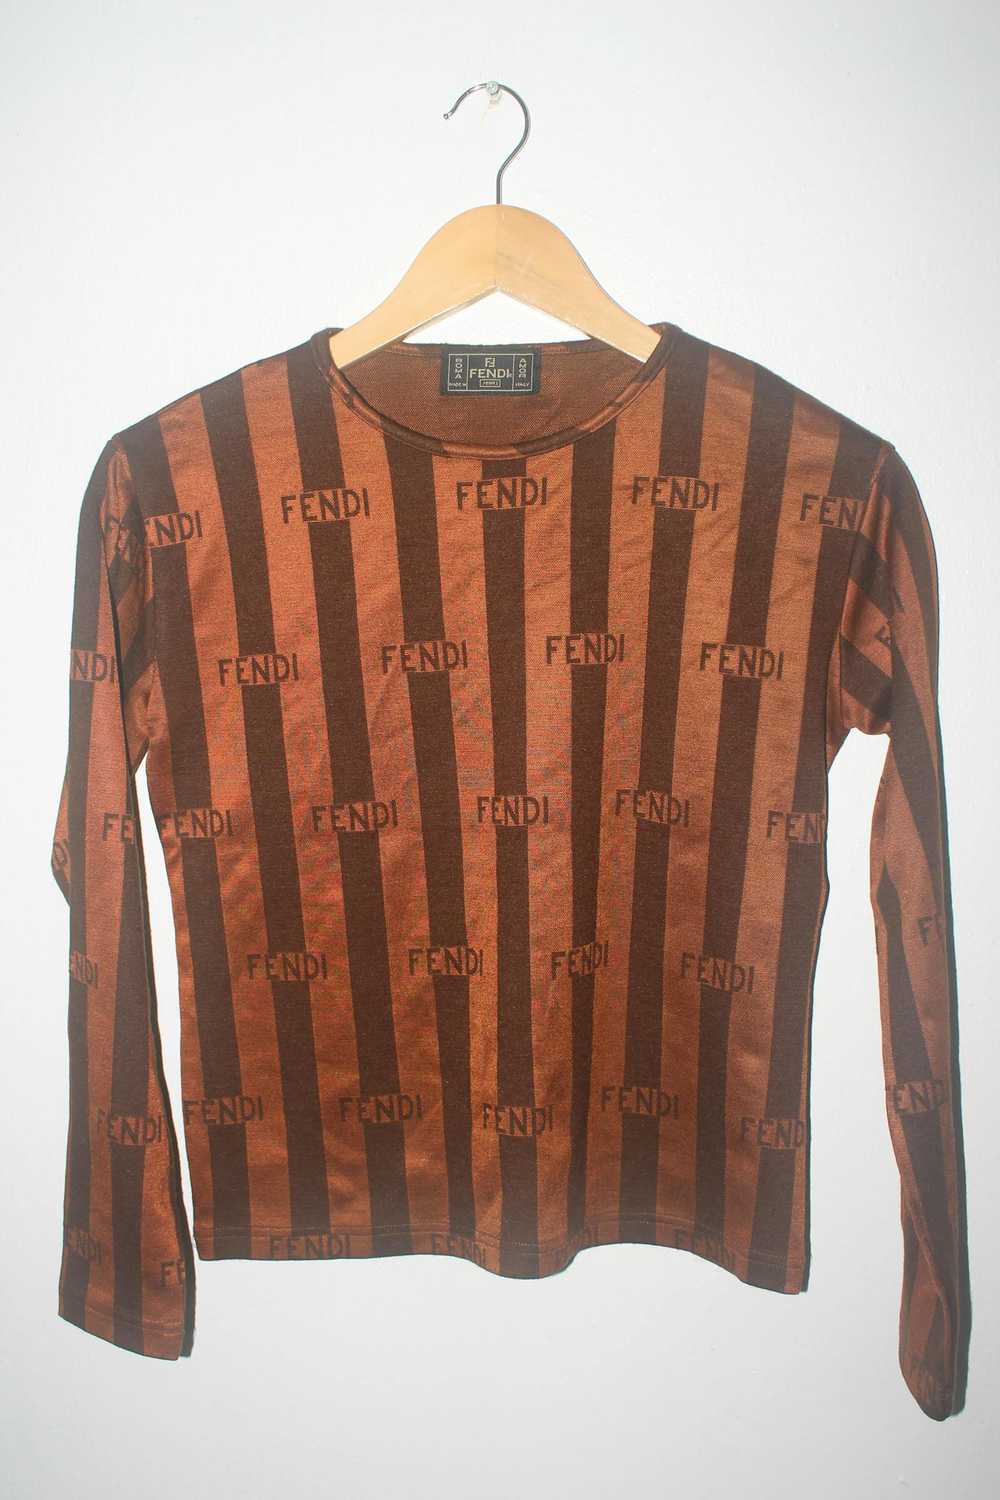 Fendi Vintage FENDI Longsleeve Spellout T shirt f… - image 1